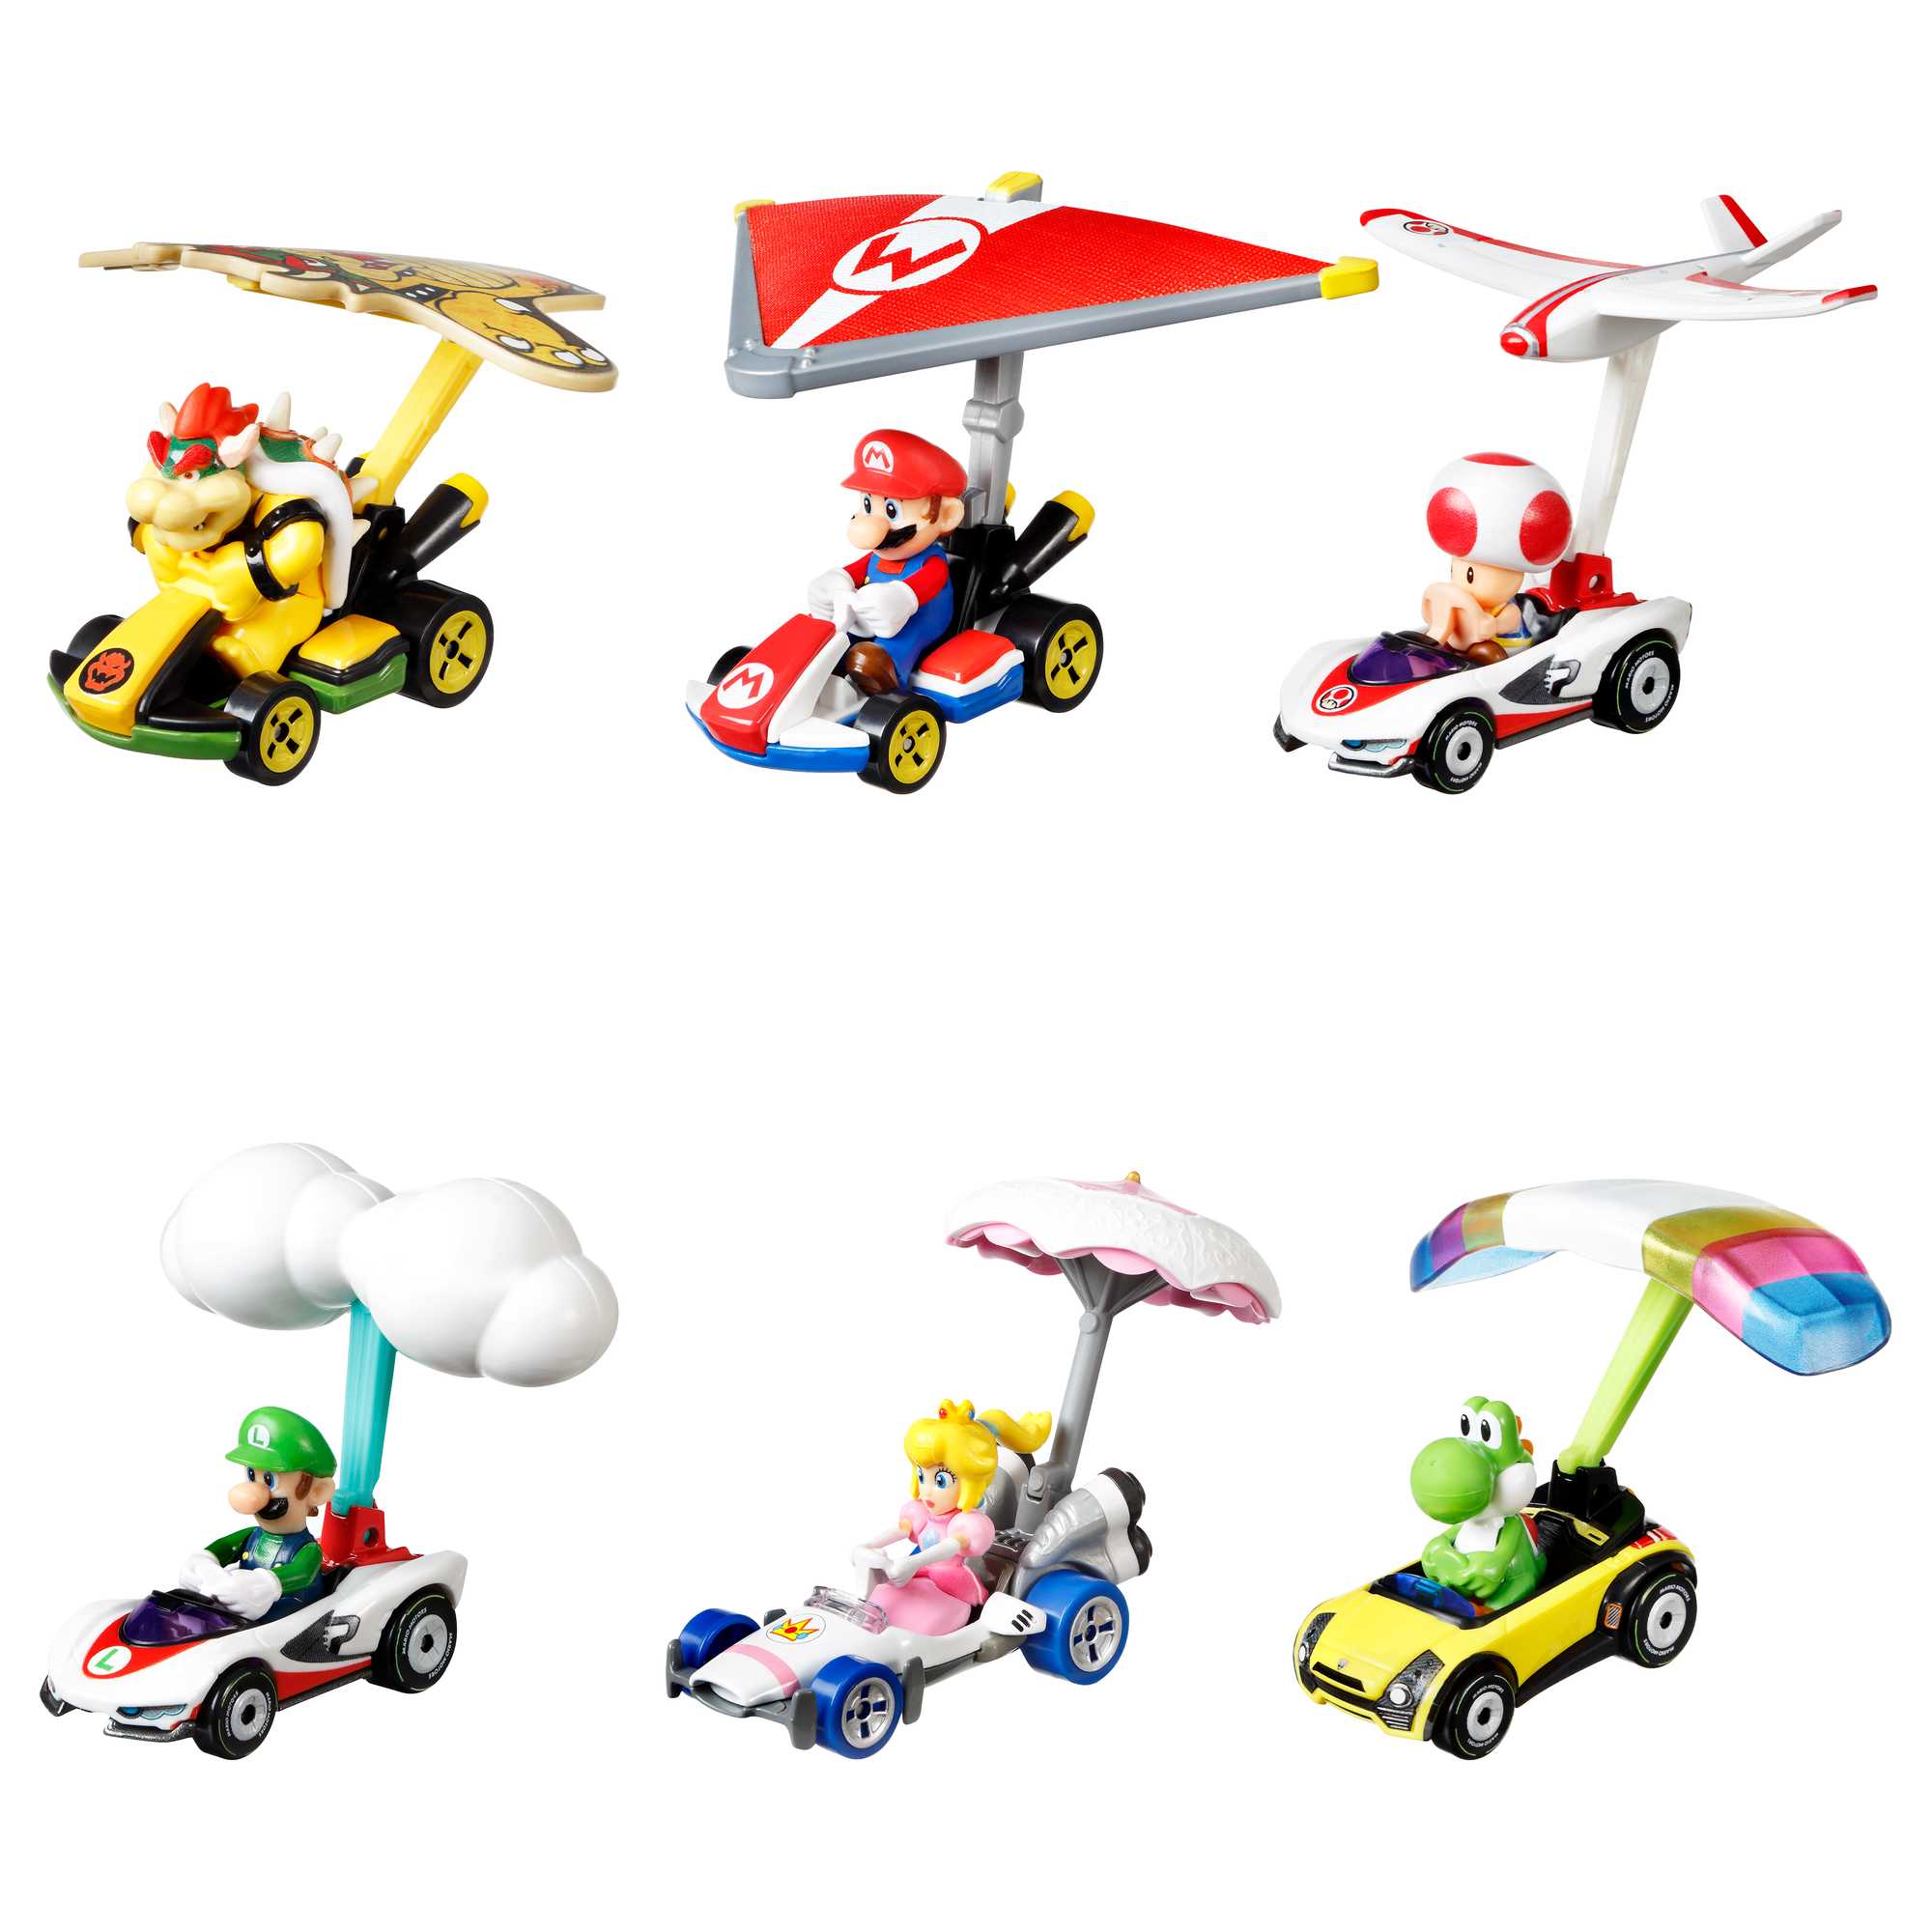 Nintendo mario kart - circuit carrera go p-wing, vehicules-garages